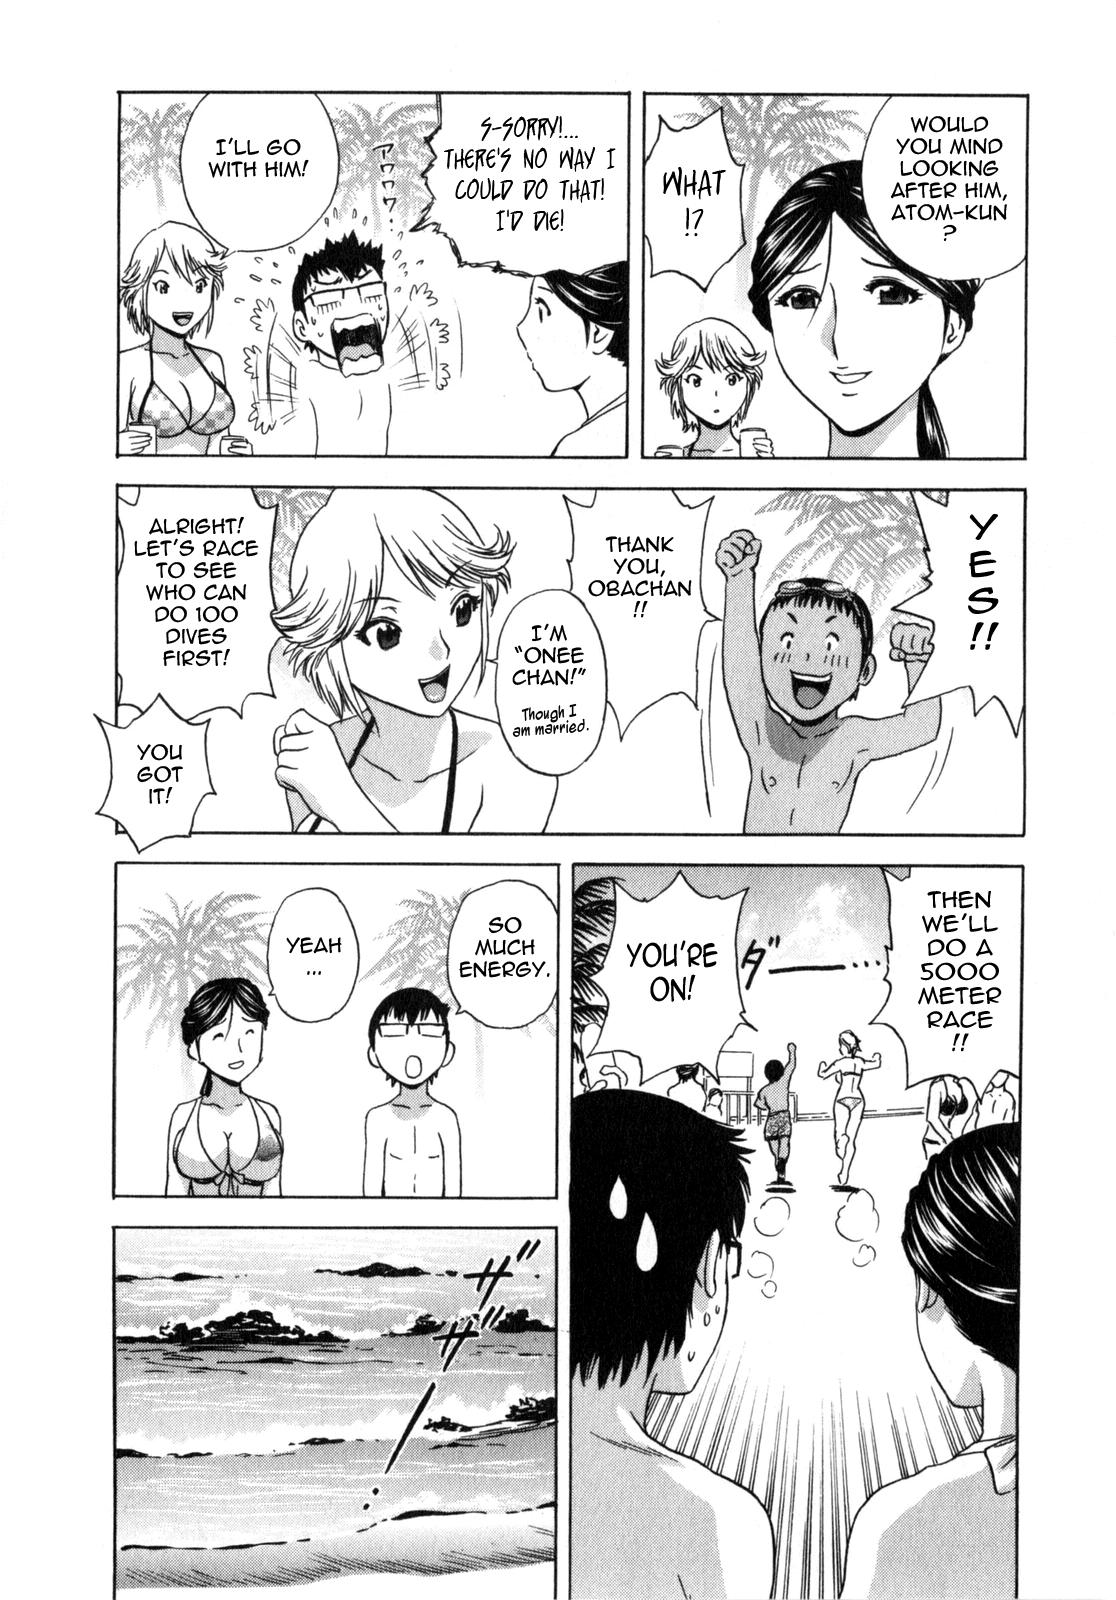 [Hidemaru] Life with Married Women Just Like a Manga 1 - Ch. 1-7 [English] {Tadanohito} 128